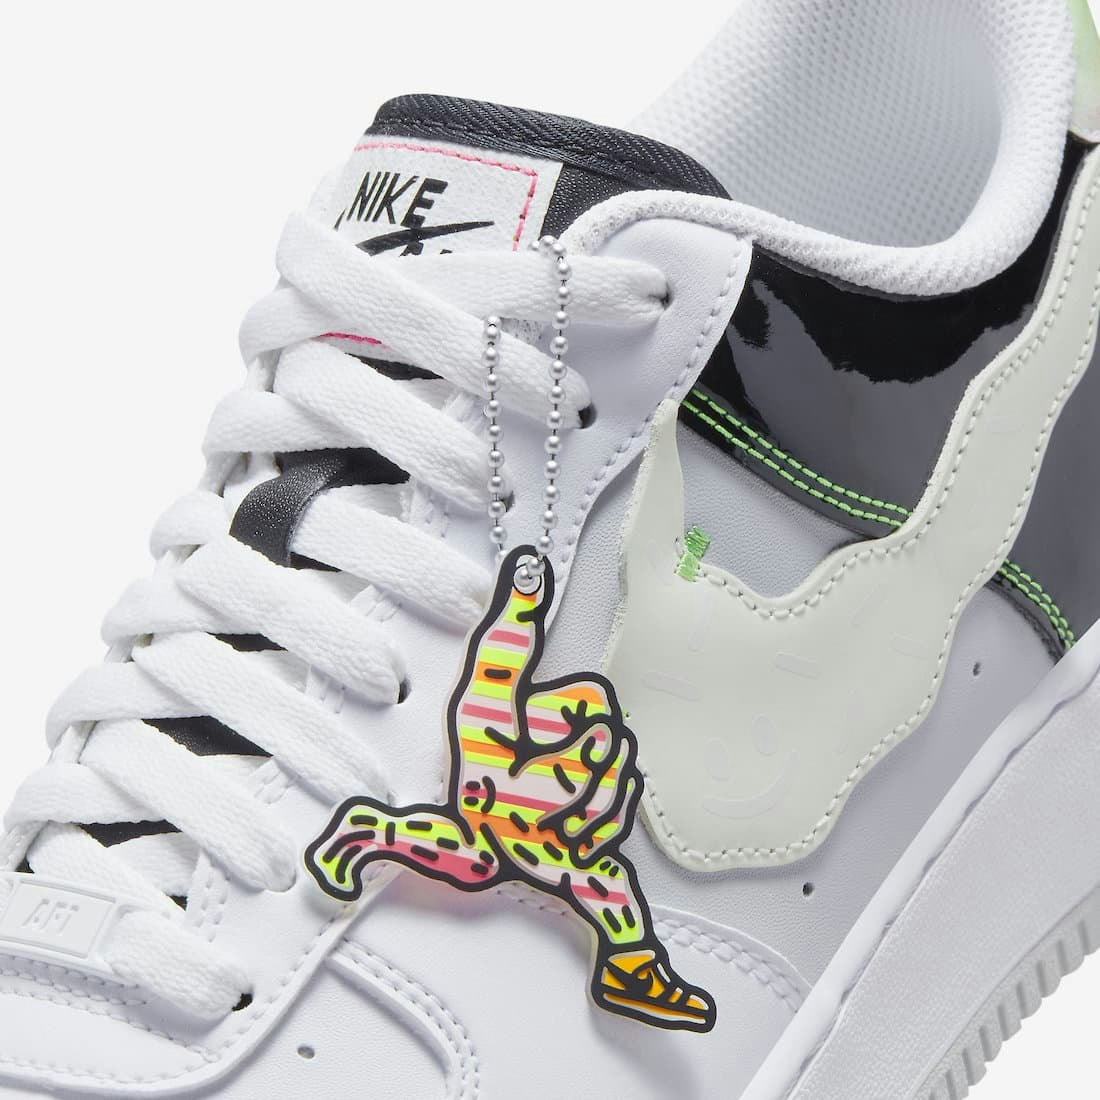 Nike Air Force 1 Low "Pop Art"